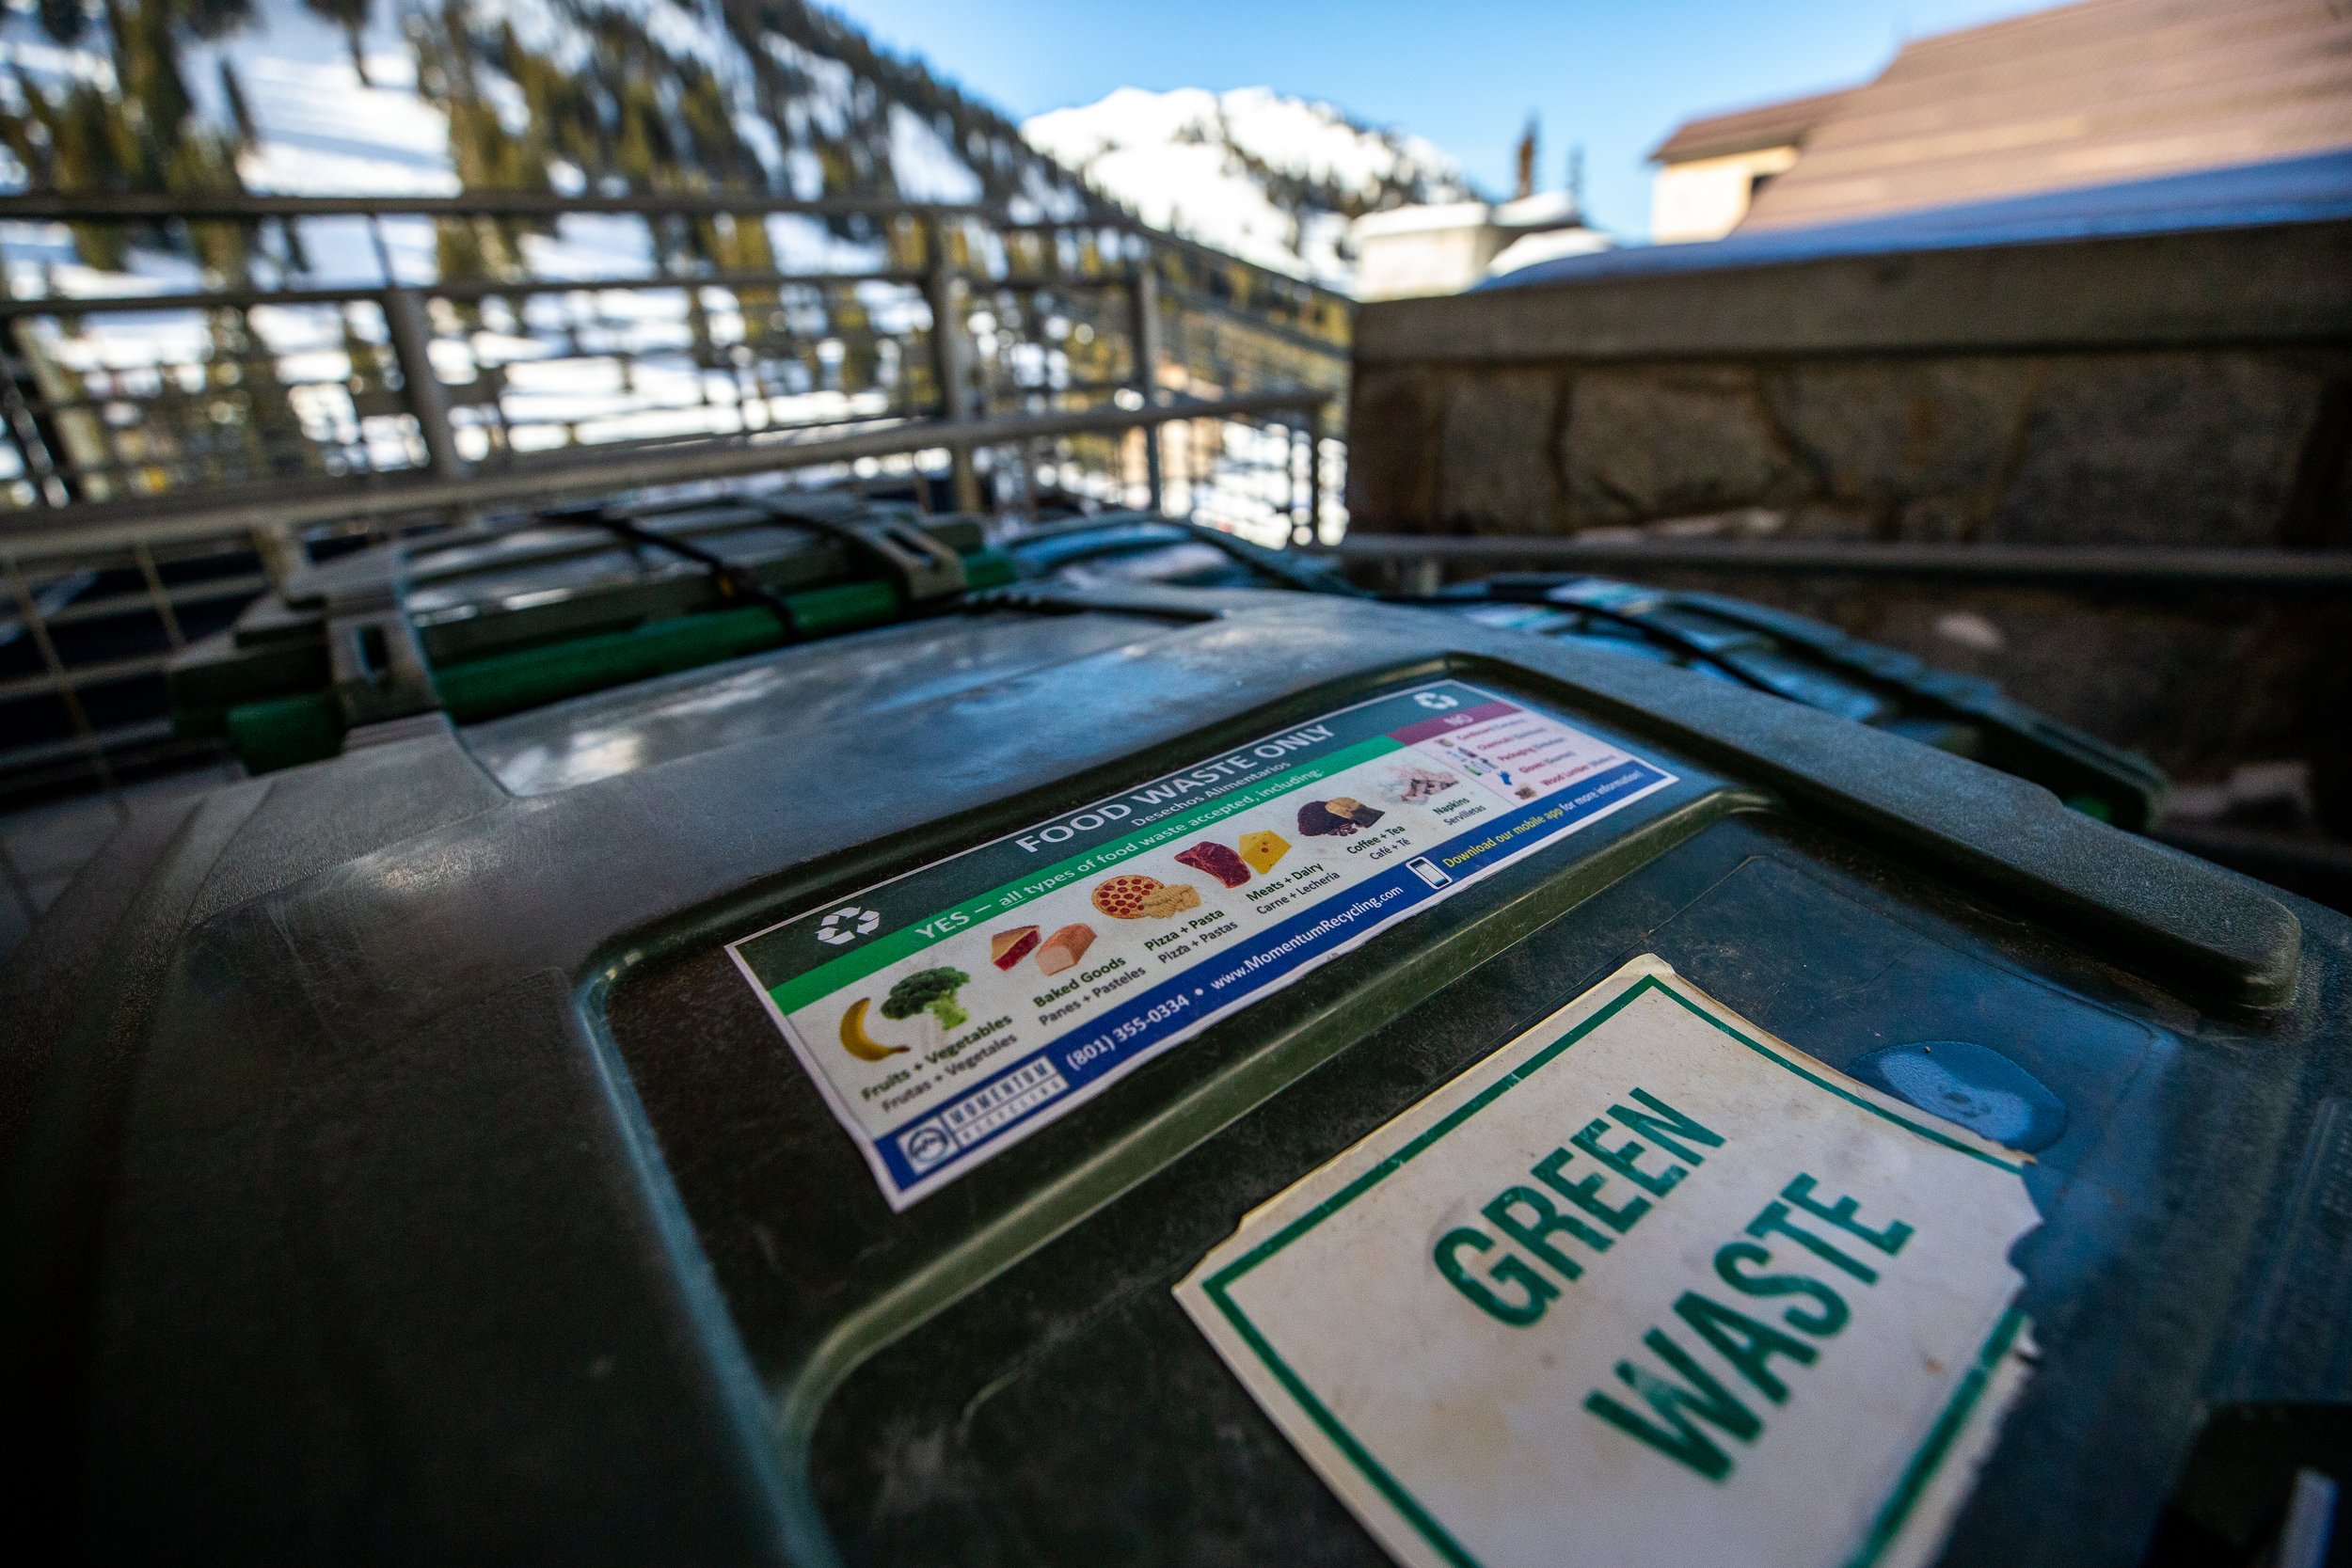 Green Waste Program